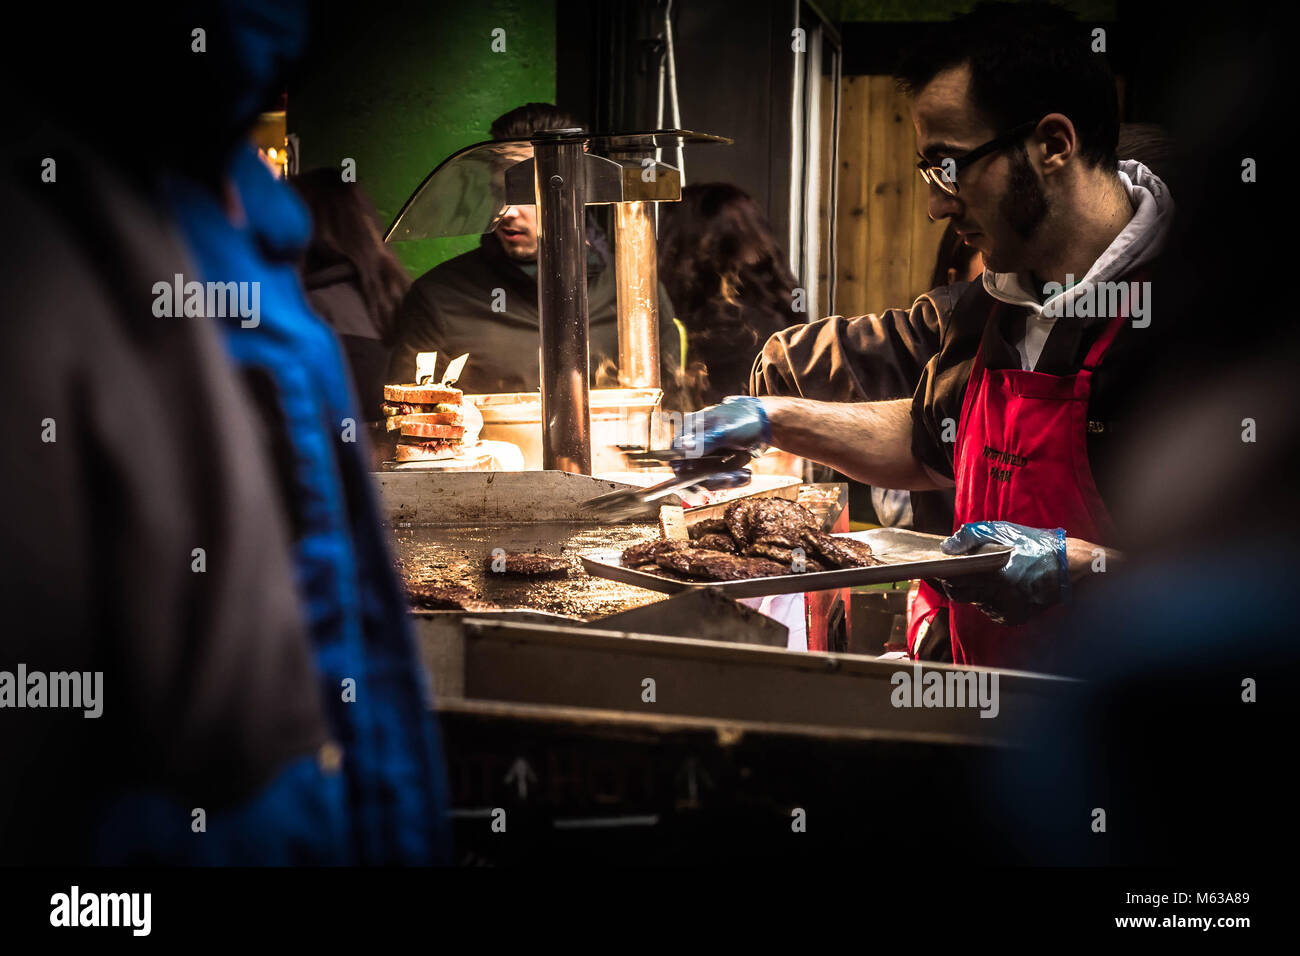 Burgers being cooked at Borough Market, London, UK Stock Photo